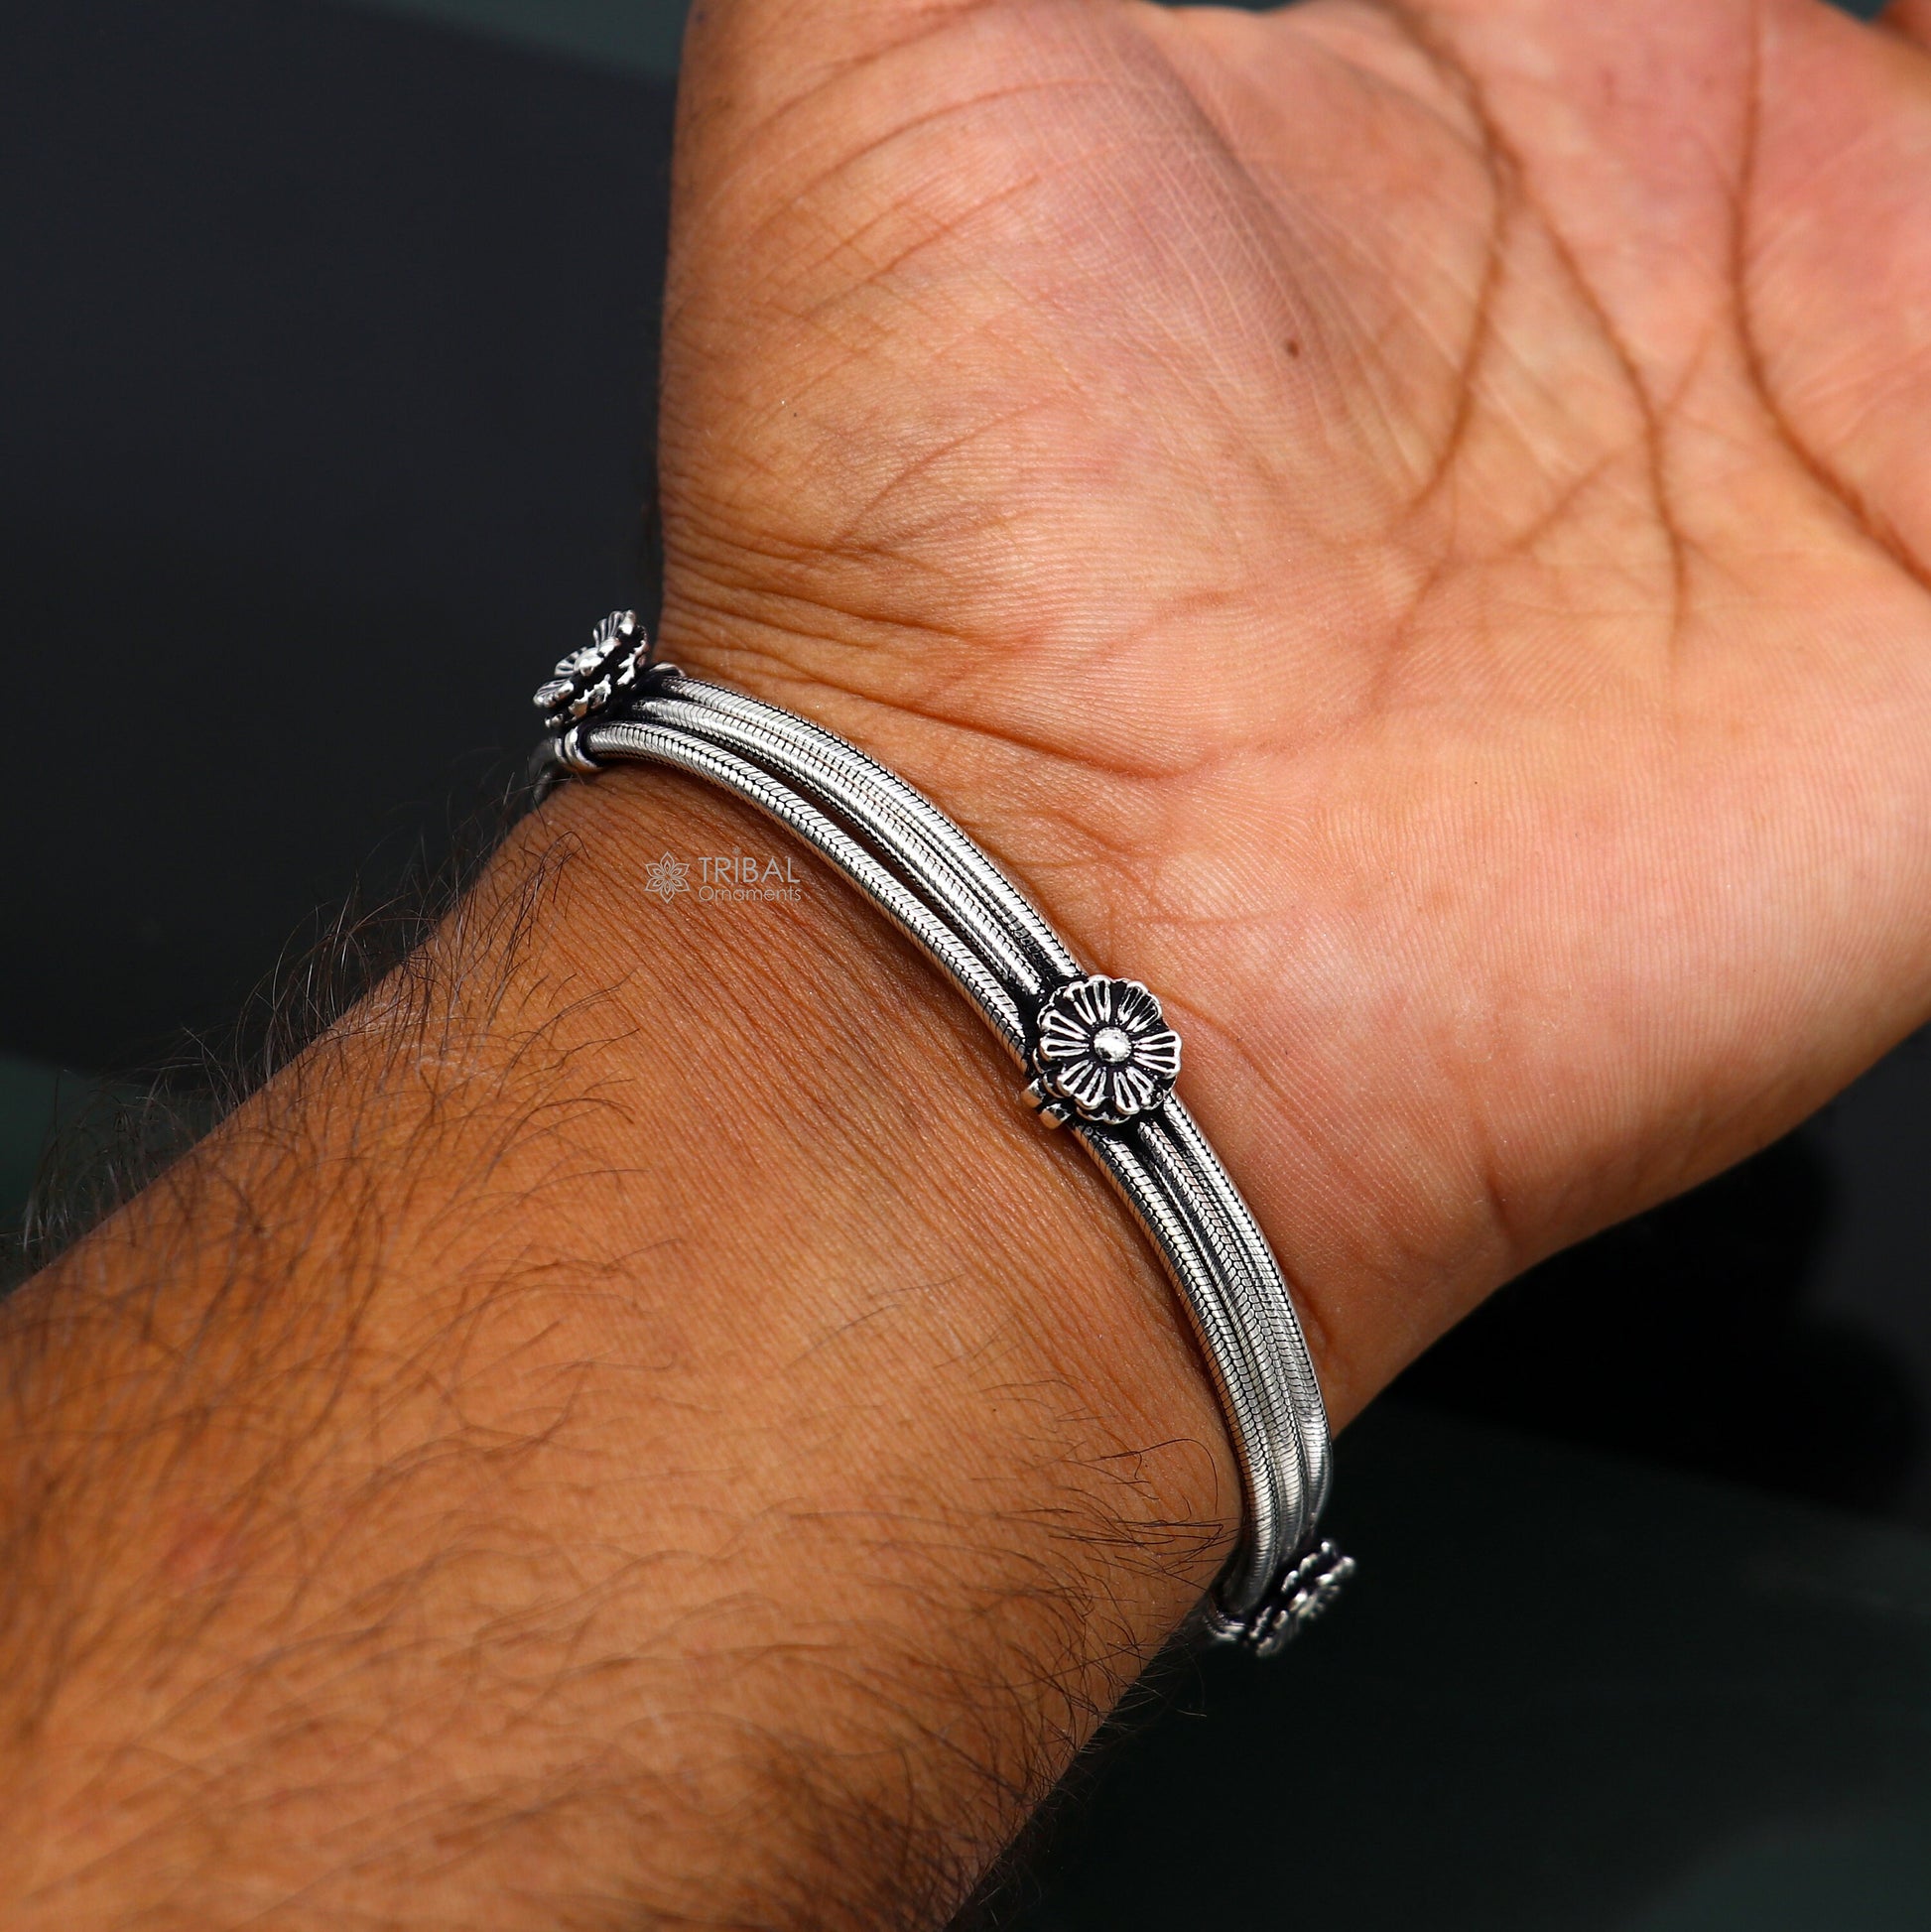 8.5" snake chain bracelet, amazing 925 sterling silver 3 line smooth design flower bracelet , best men's gifting bracelet from India sbr688 - TRIBAL ORNAMENTS